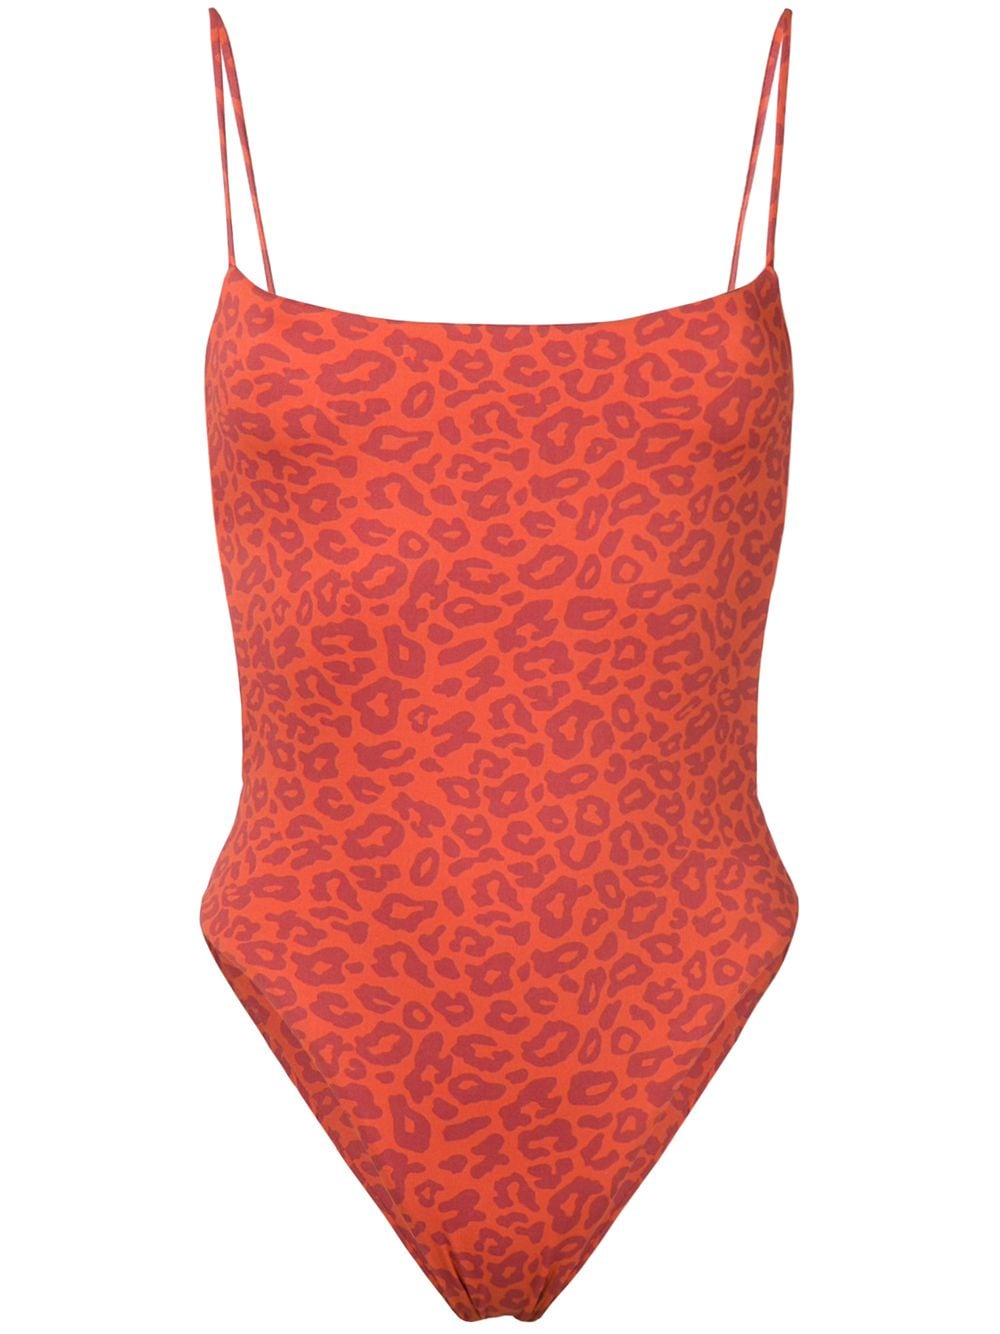 фото Sian swimwear купальник с леопардовым принтом